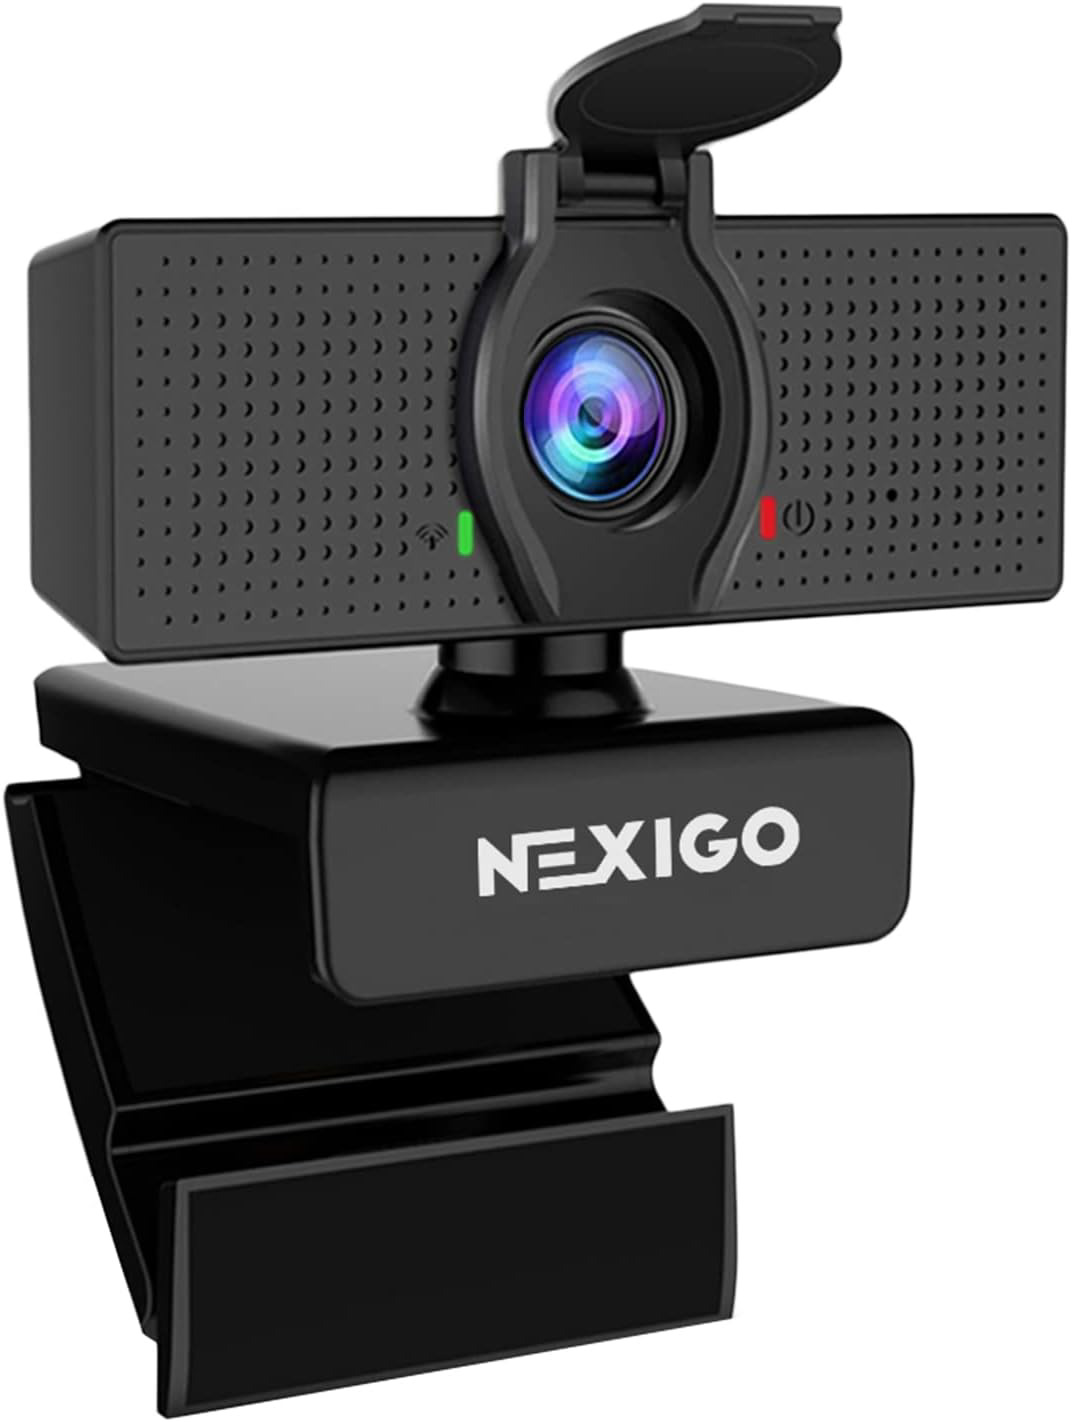 NexiGo N60 1080P Webcam with Microphone, Adjustable FOV, Zoom, Software Control